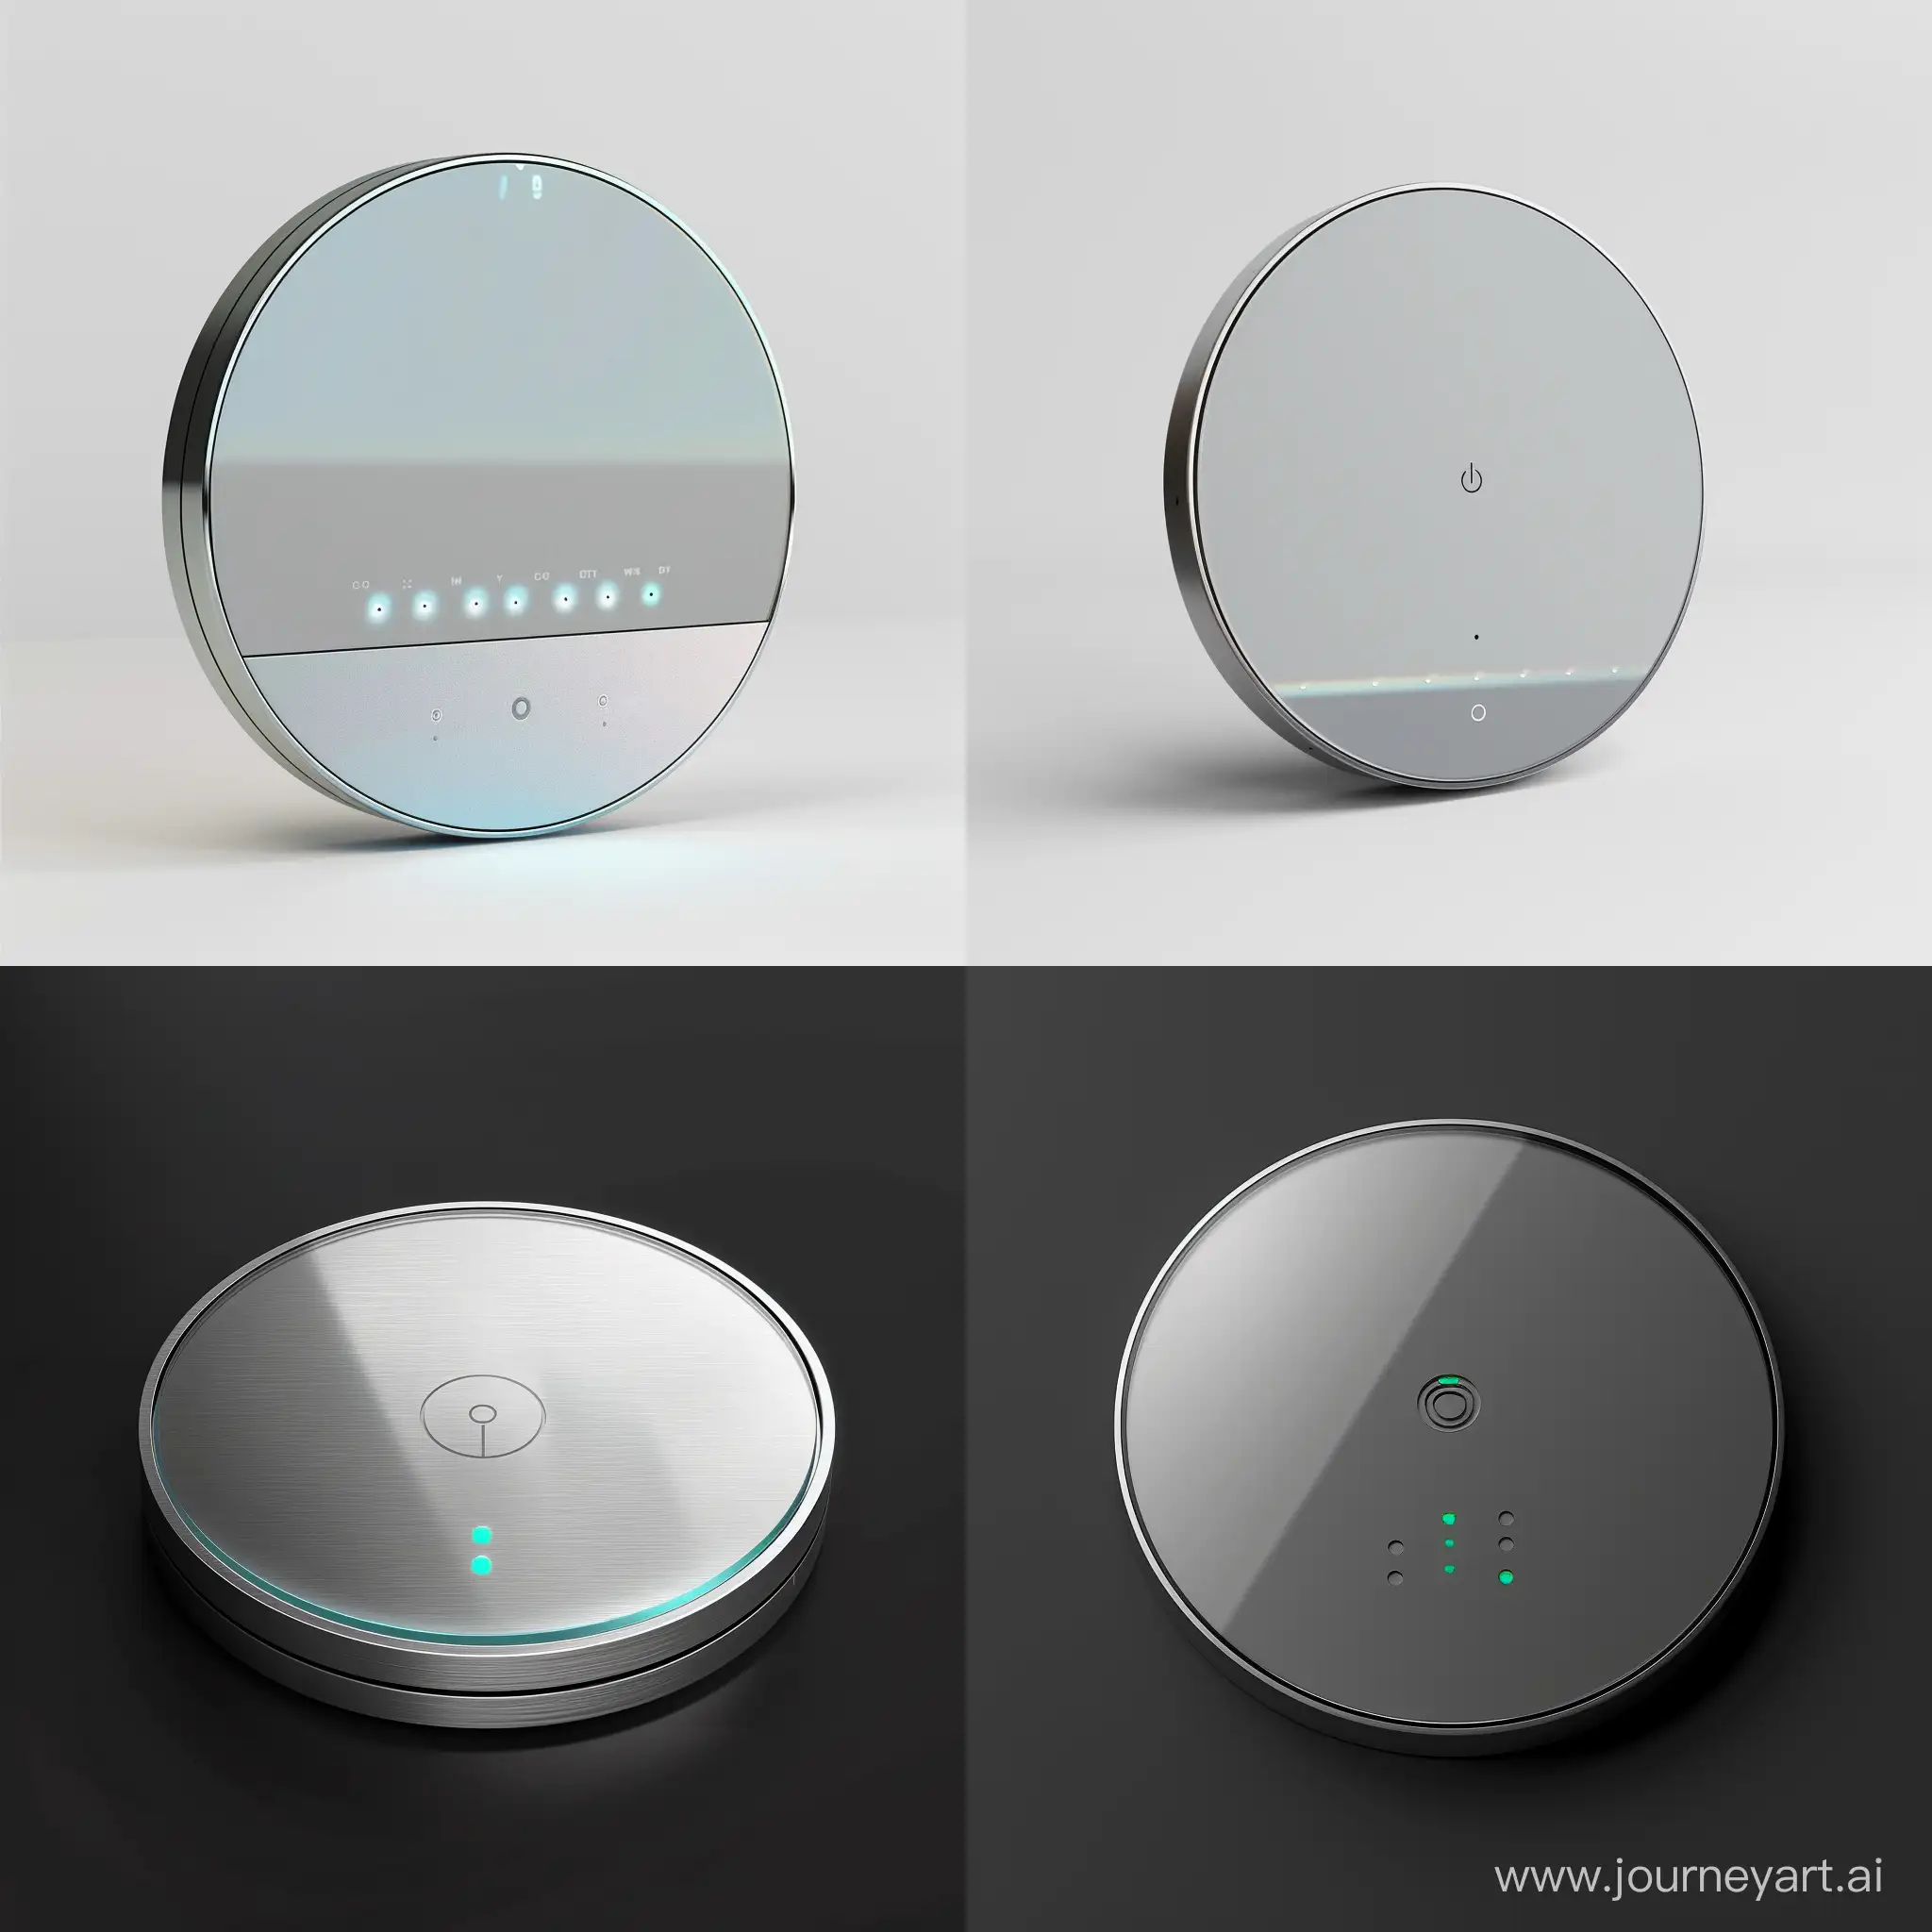 Sleek-Minimalist-Smart-Energy-Monitor-Recycled-Aluminum-Design-with-TouchSensitive-Interface